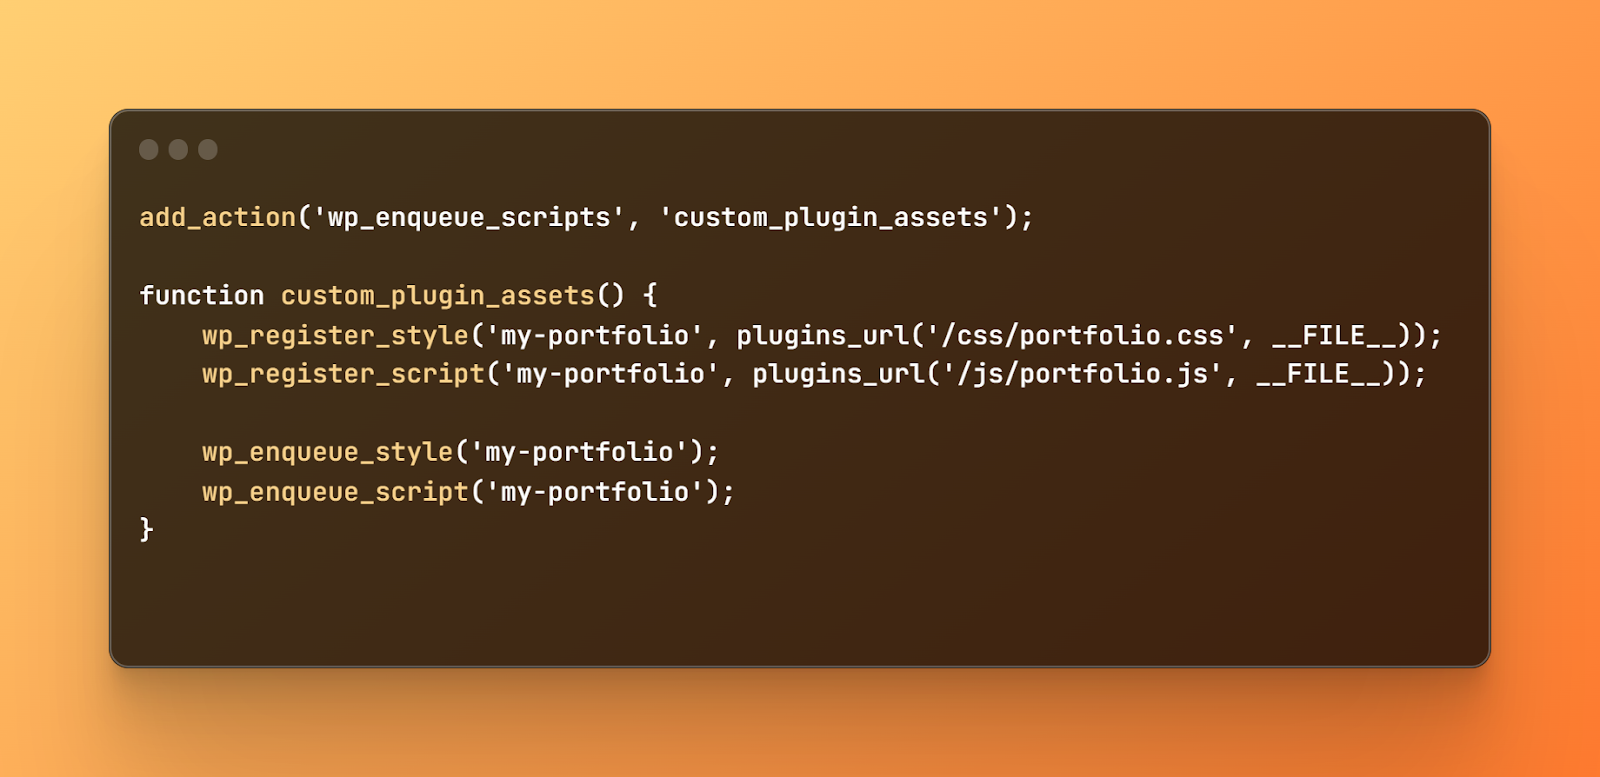 wp_enqueue_script code, add_action('wp_enqueue_scripts', 'custom_plugin_assets'); function custom_plugin_assets() {wp_register_style('my-portfolio', plugins_url('/css/portfolio.css', __FILE__)); wp_register_script('my-portfolio', plugins_url('/js/portfolio.js', __FILE__));    wp_enqueue_style('my-portfolio'); wp_enqueue_script('my-portfolio'); }